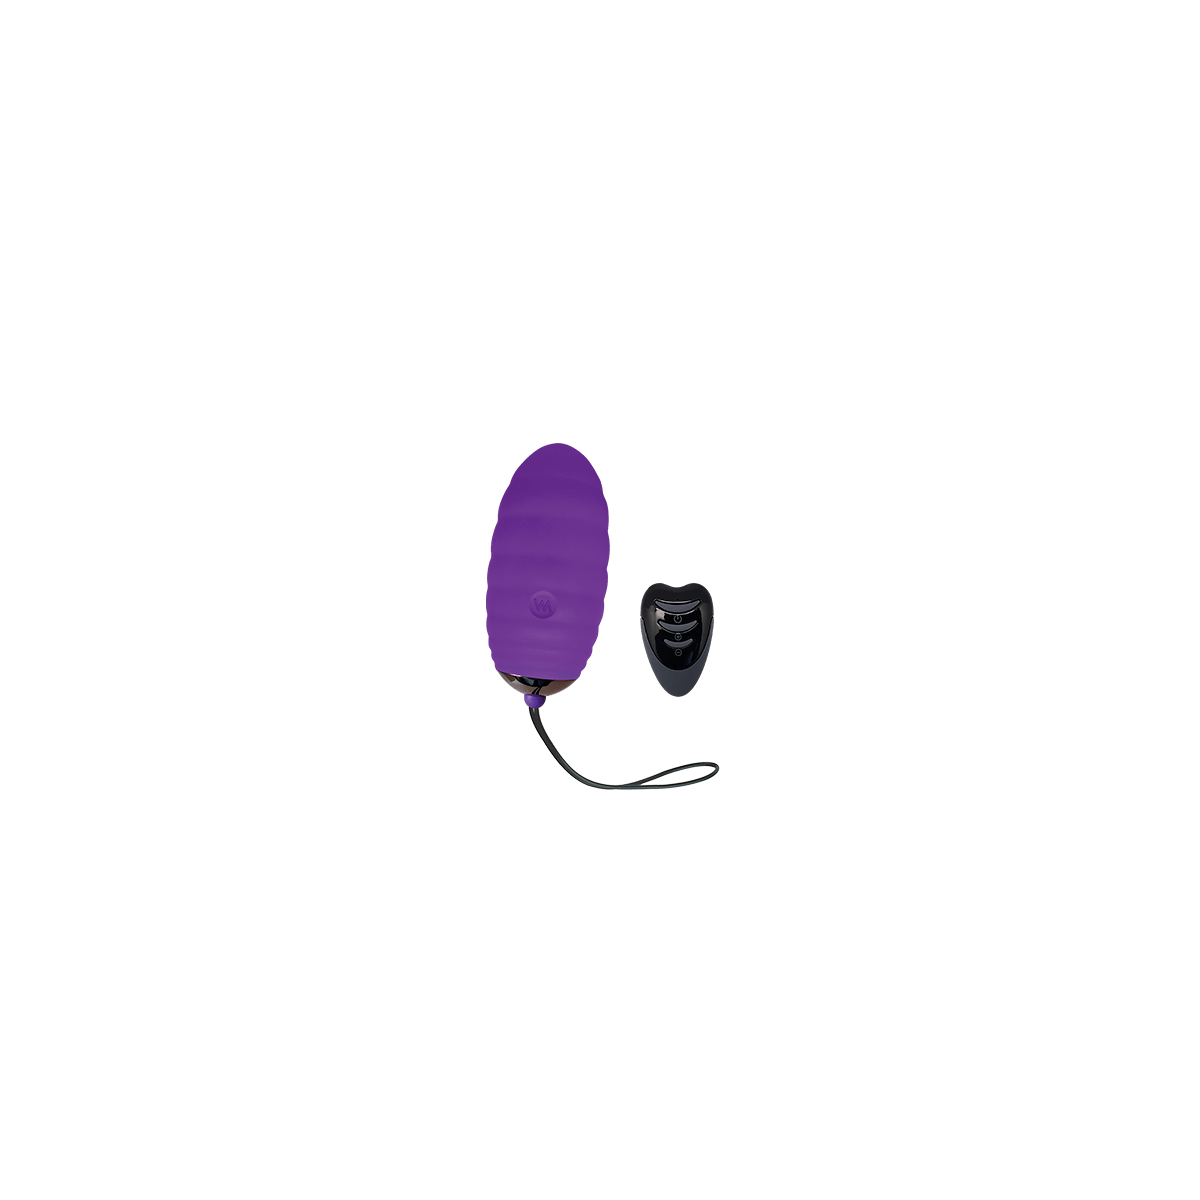 Ovetto vaginale vibrante Ocean Breeze 2.0 + LRS purple